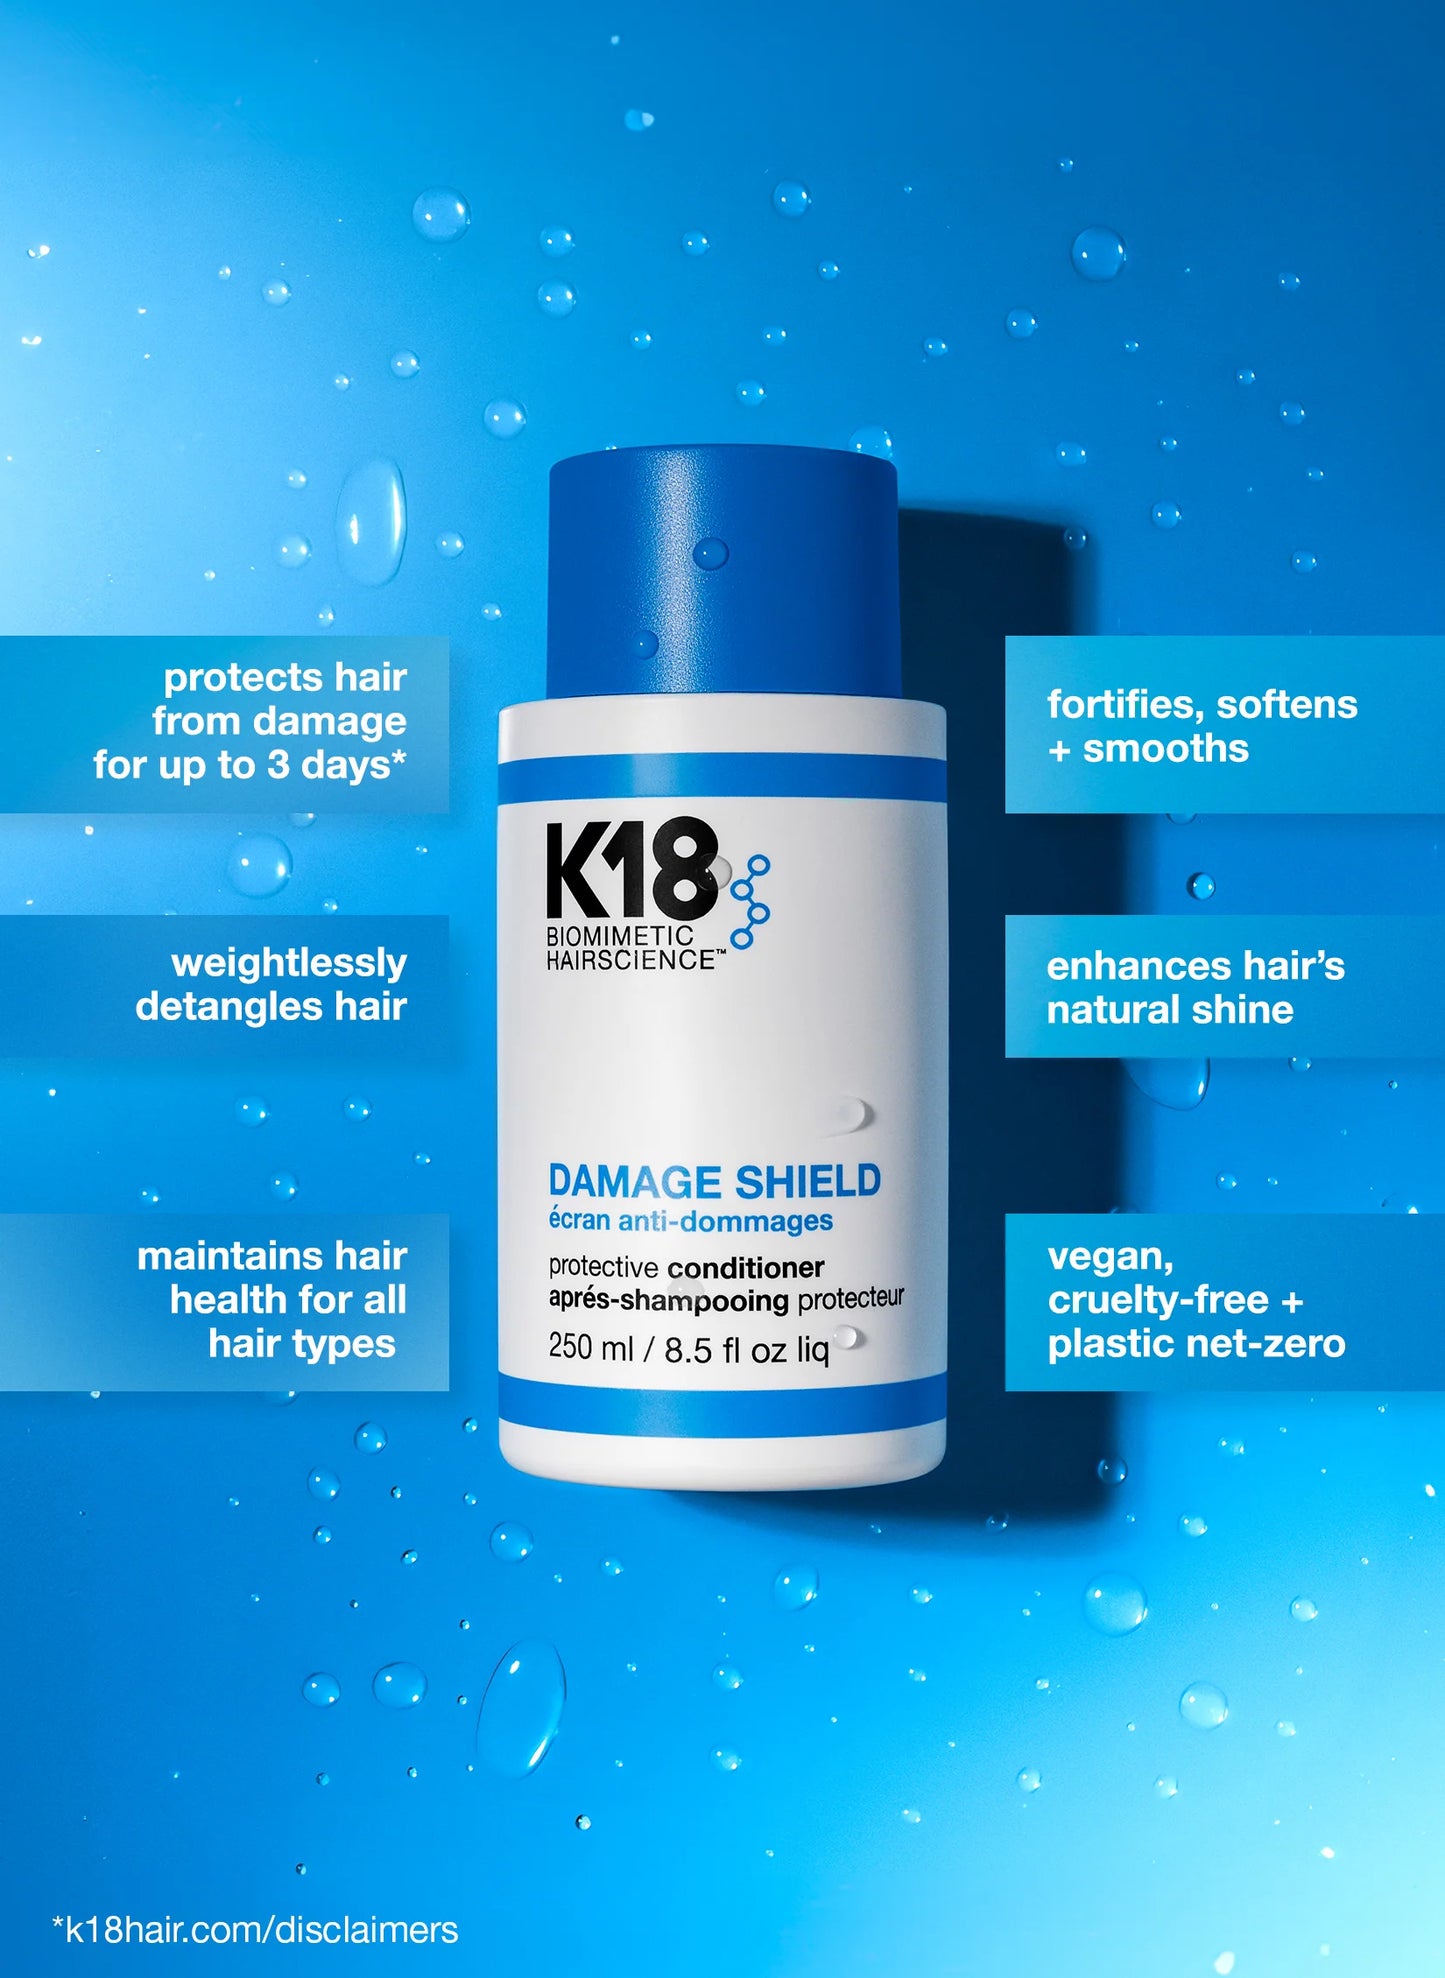 K18 DAMAGE SHIELD protective conditioner 250ml